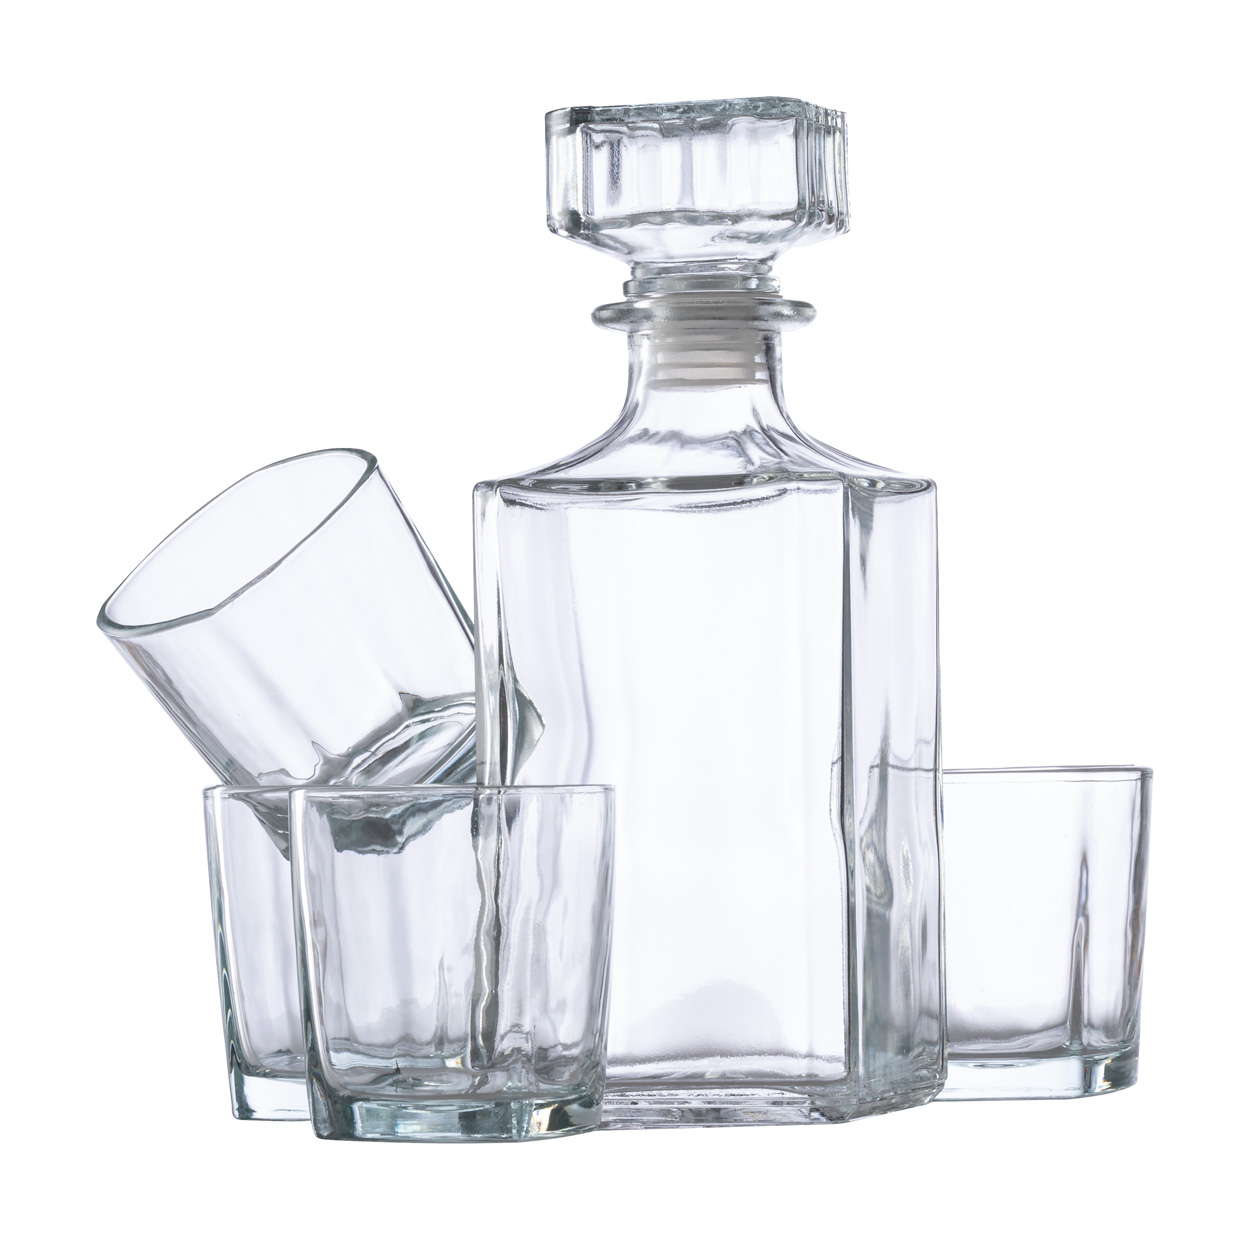 Rockwel whiskey set - Transparente